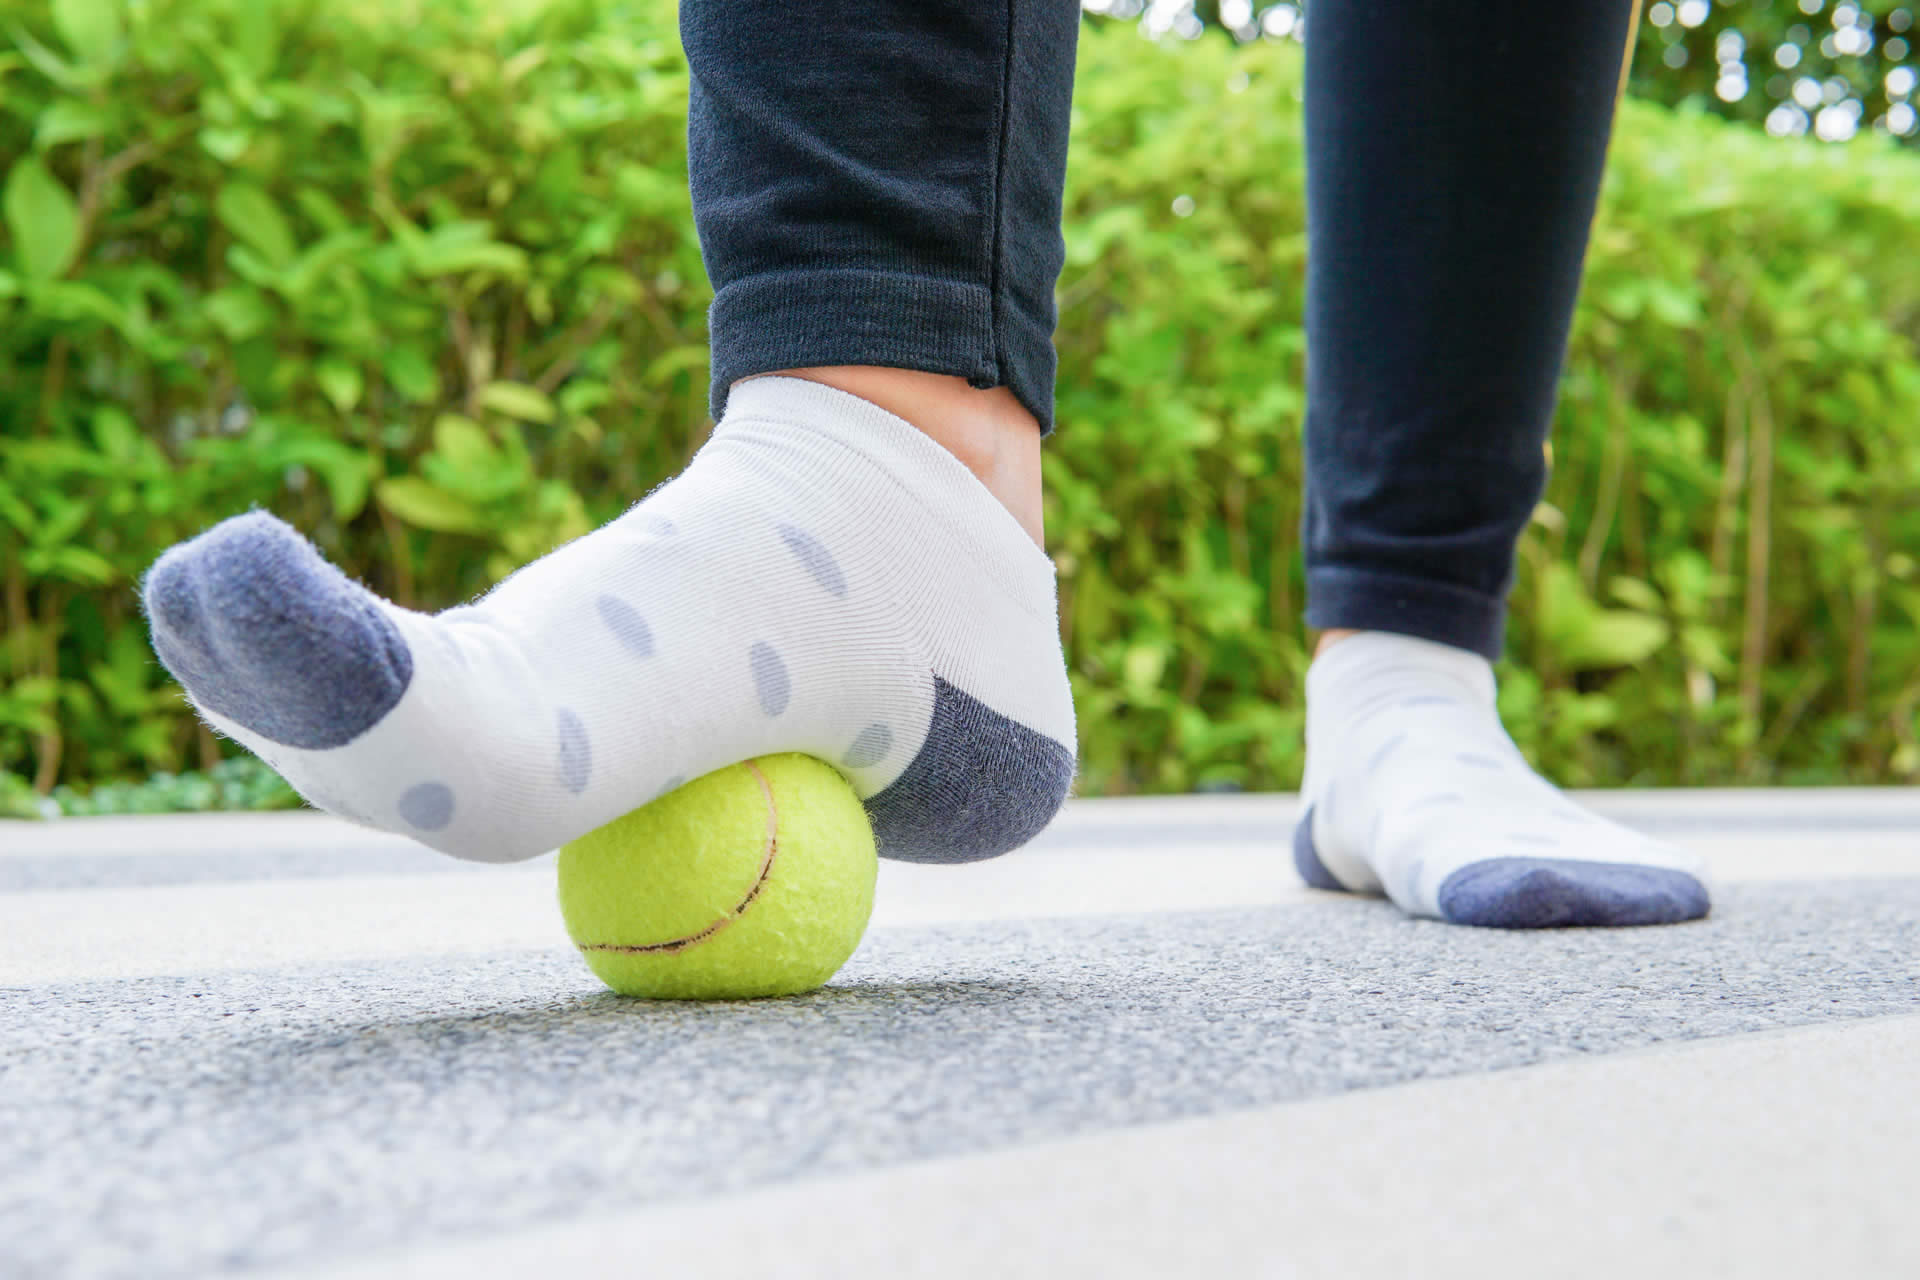 Myofascial Release Exercises Using a Tennis Ball